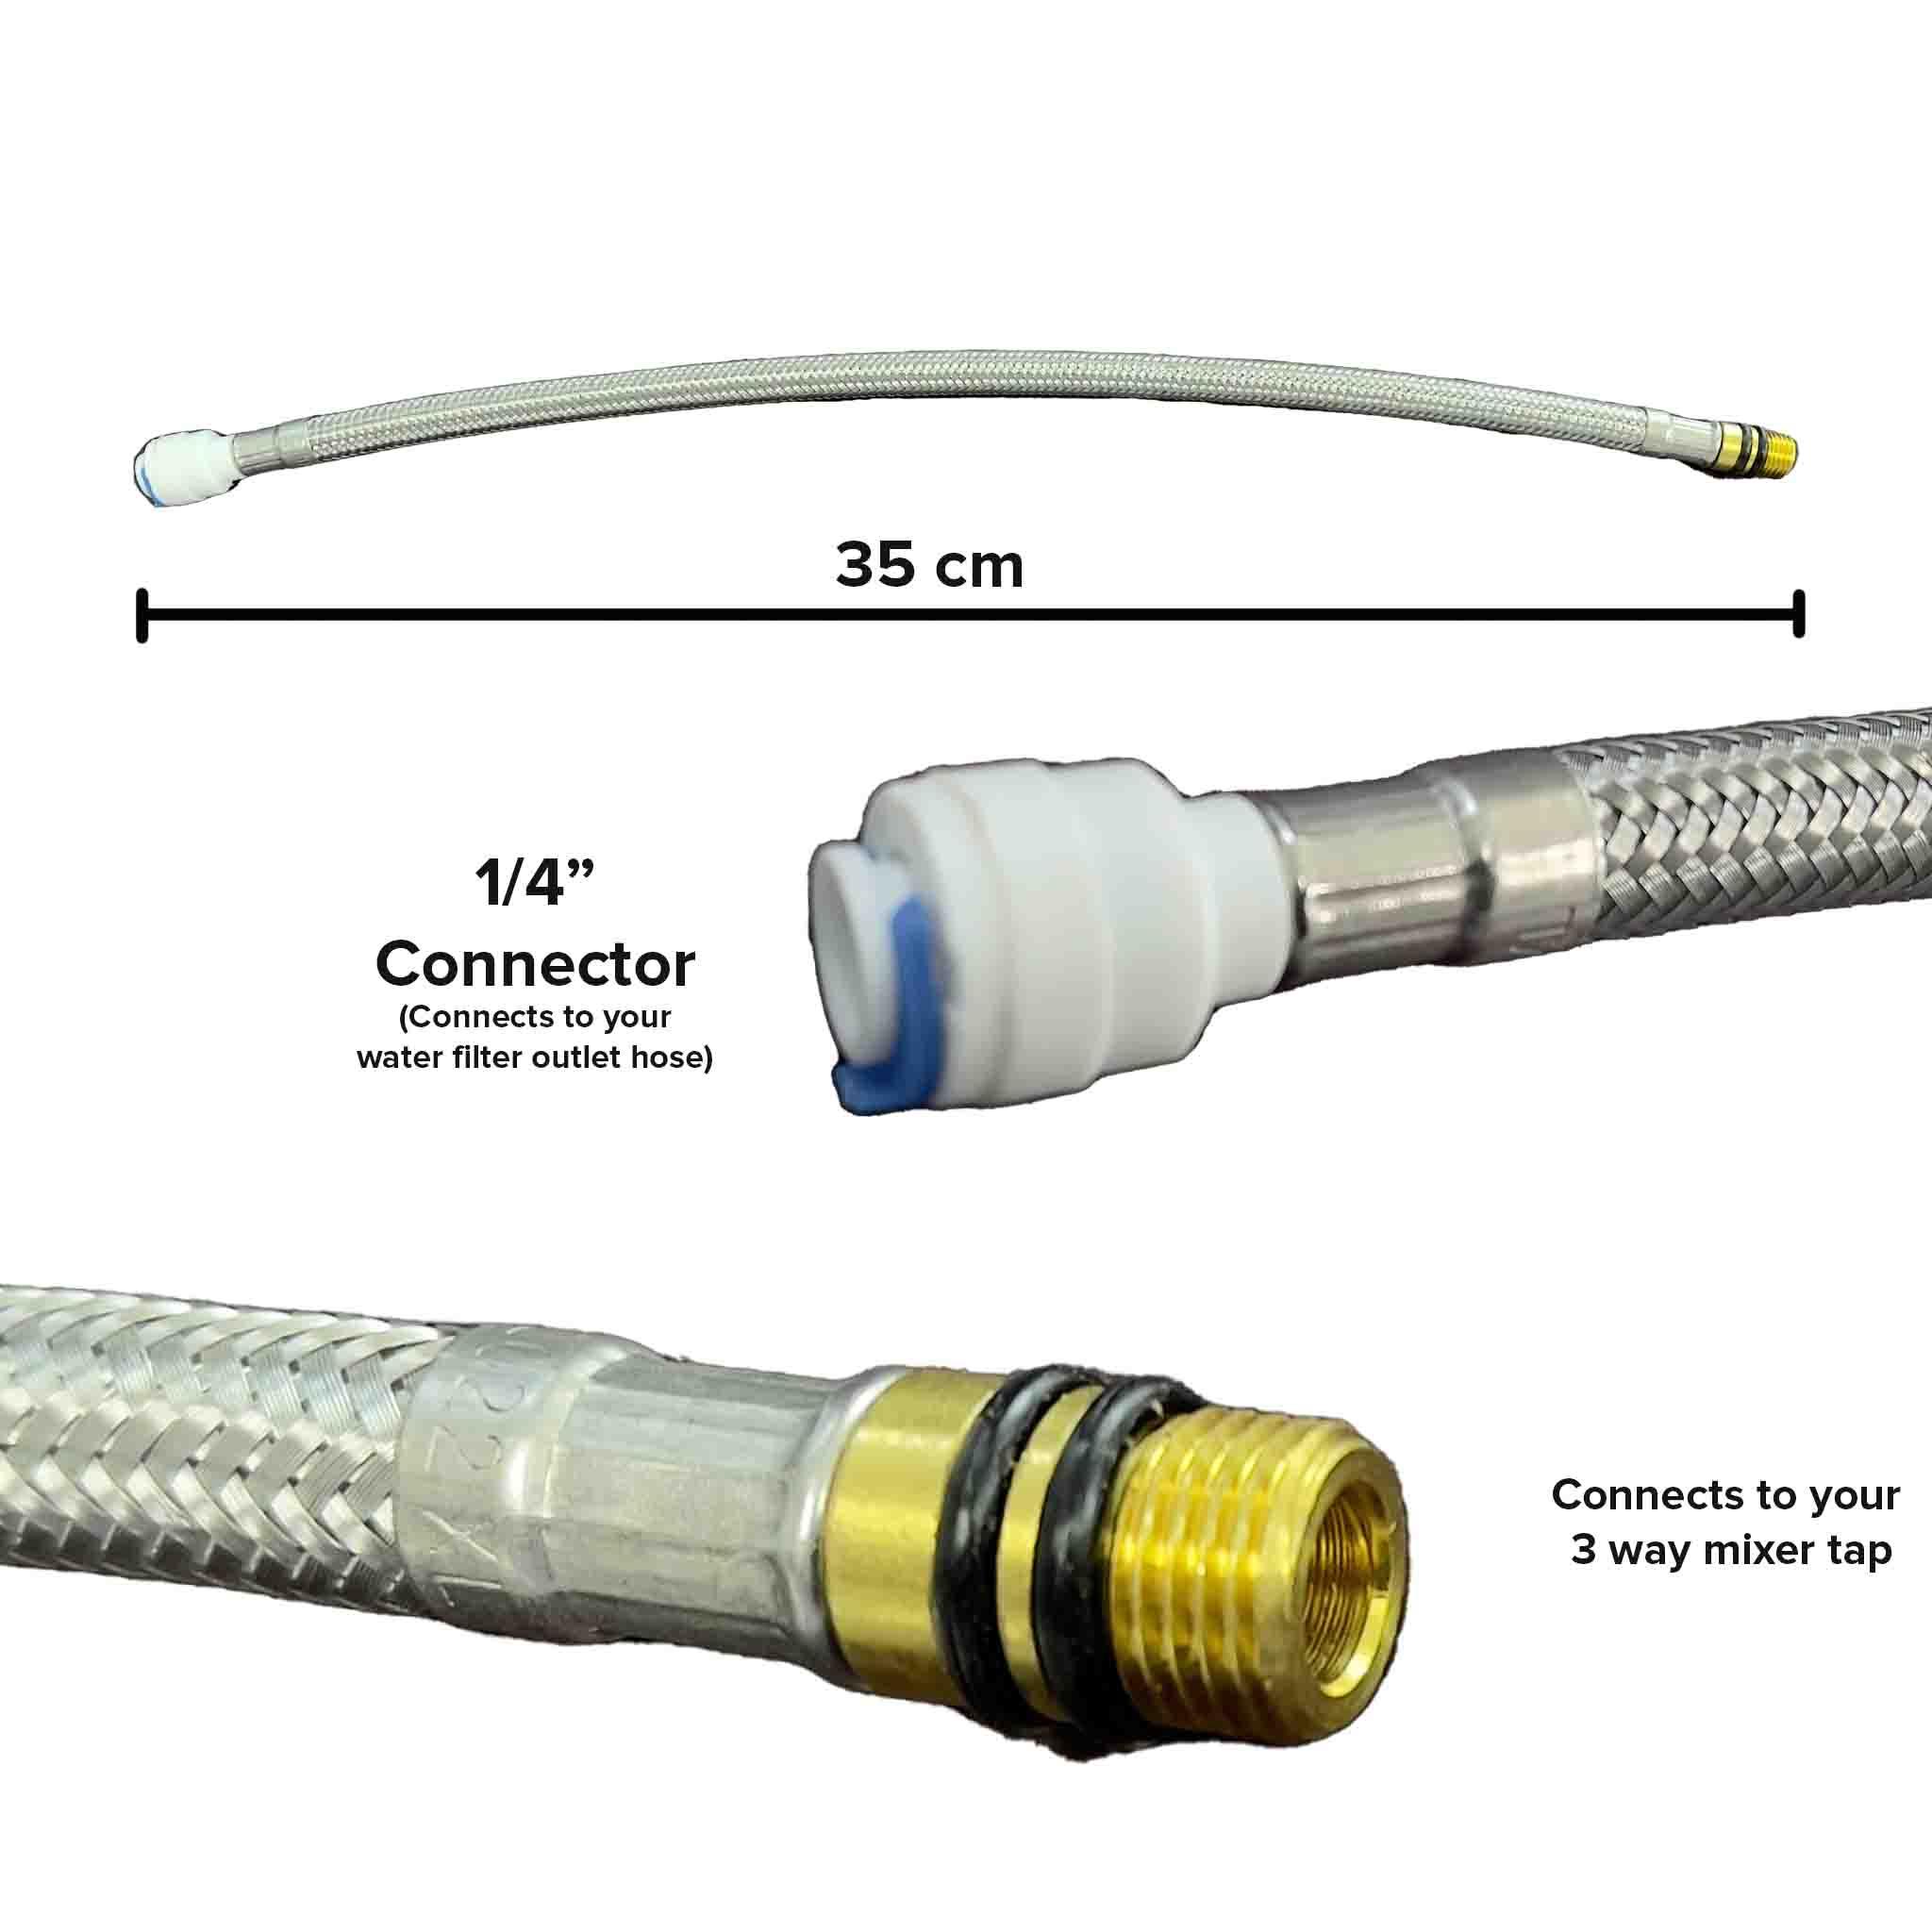 3 way mixer tap to filter connector hose - Alkaline World